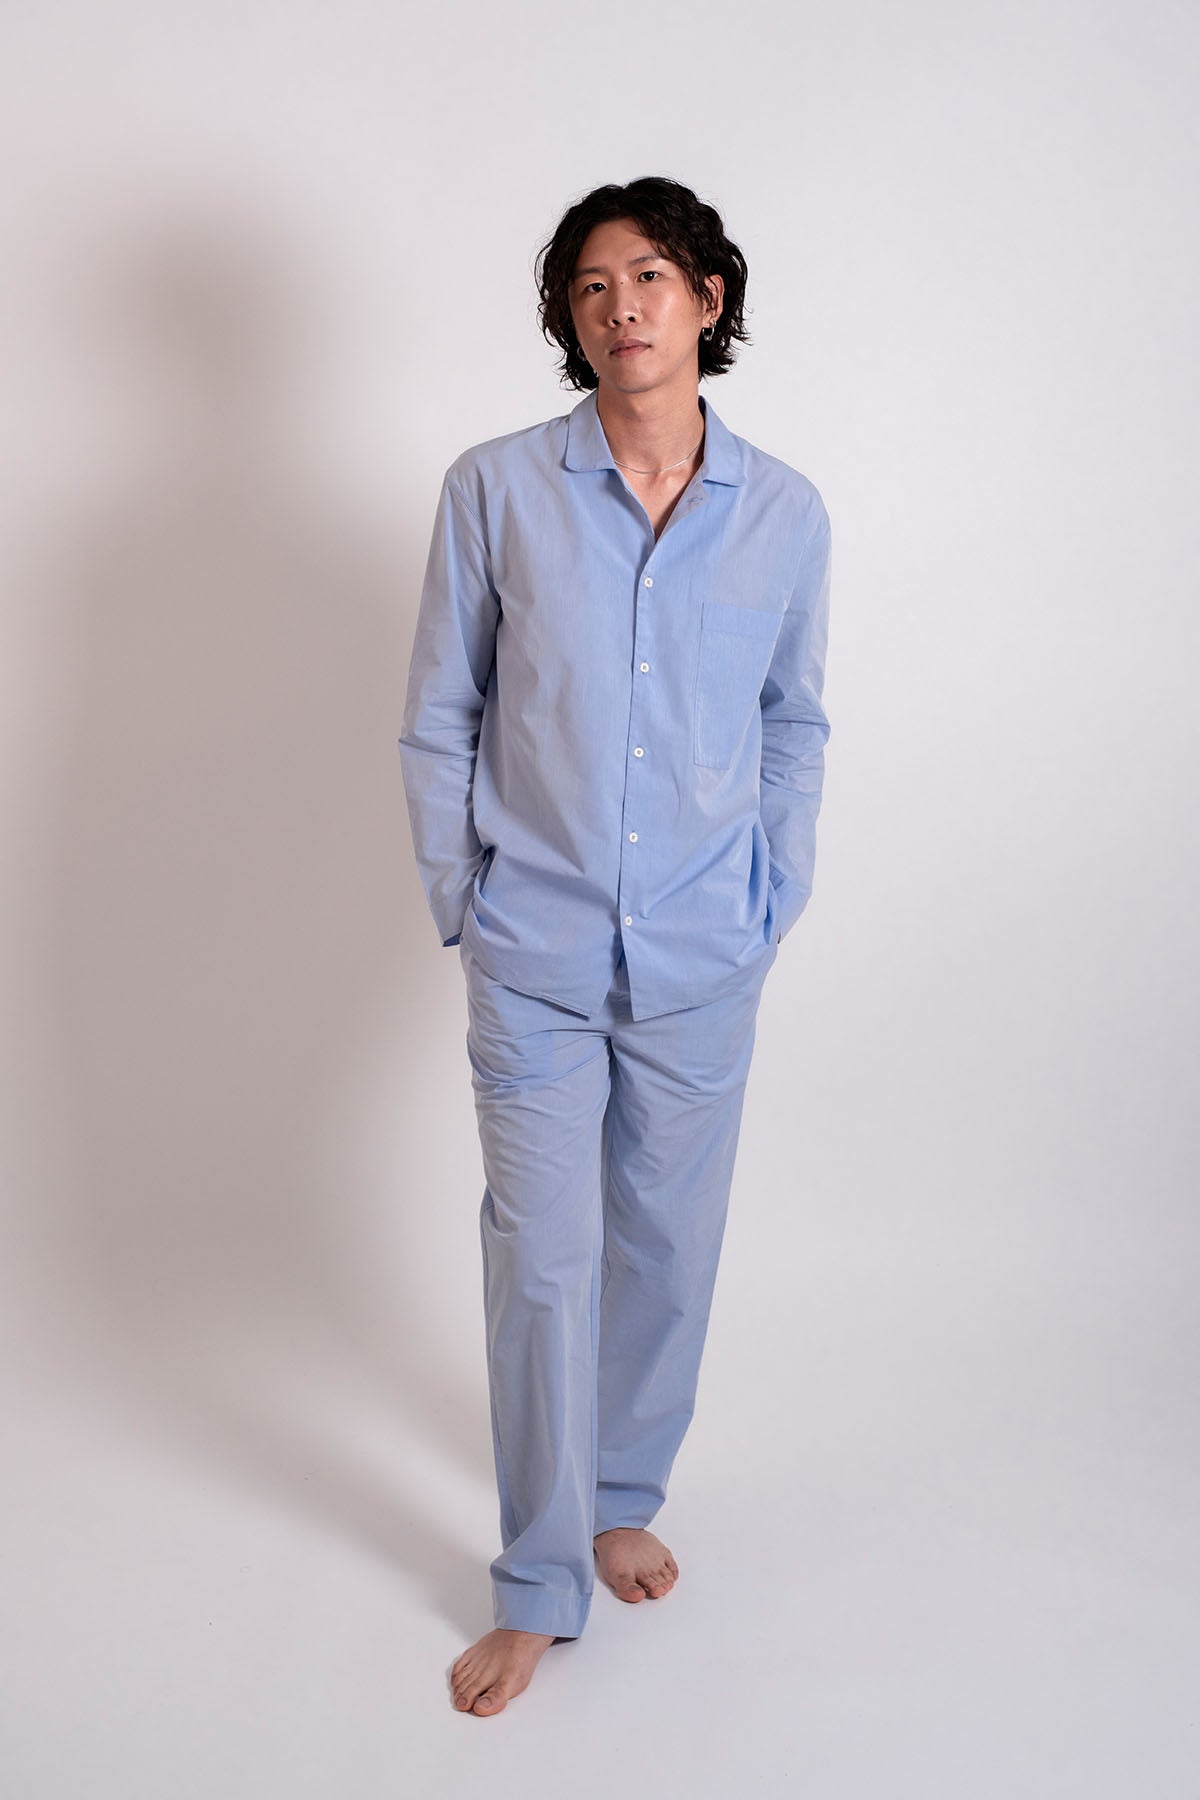 male model in pyjama color breeze blue_front view_avonte